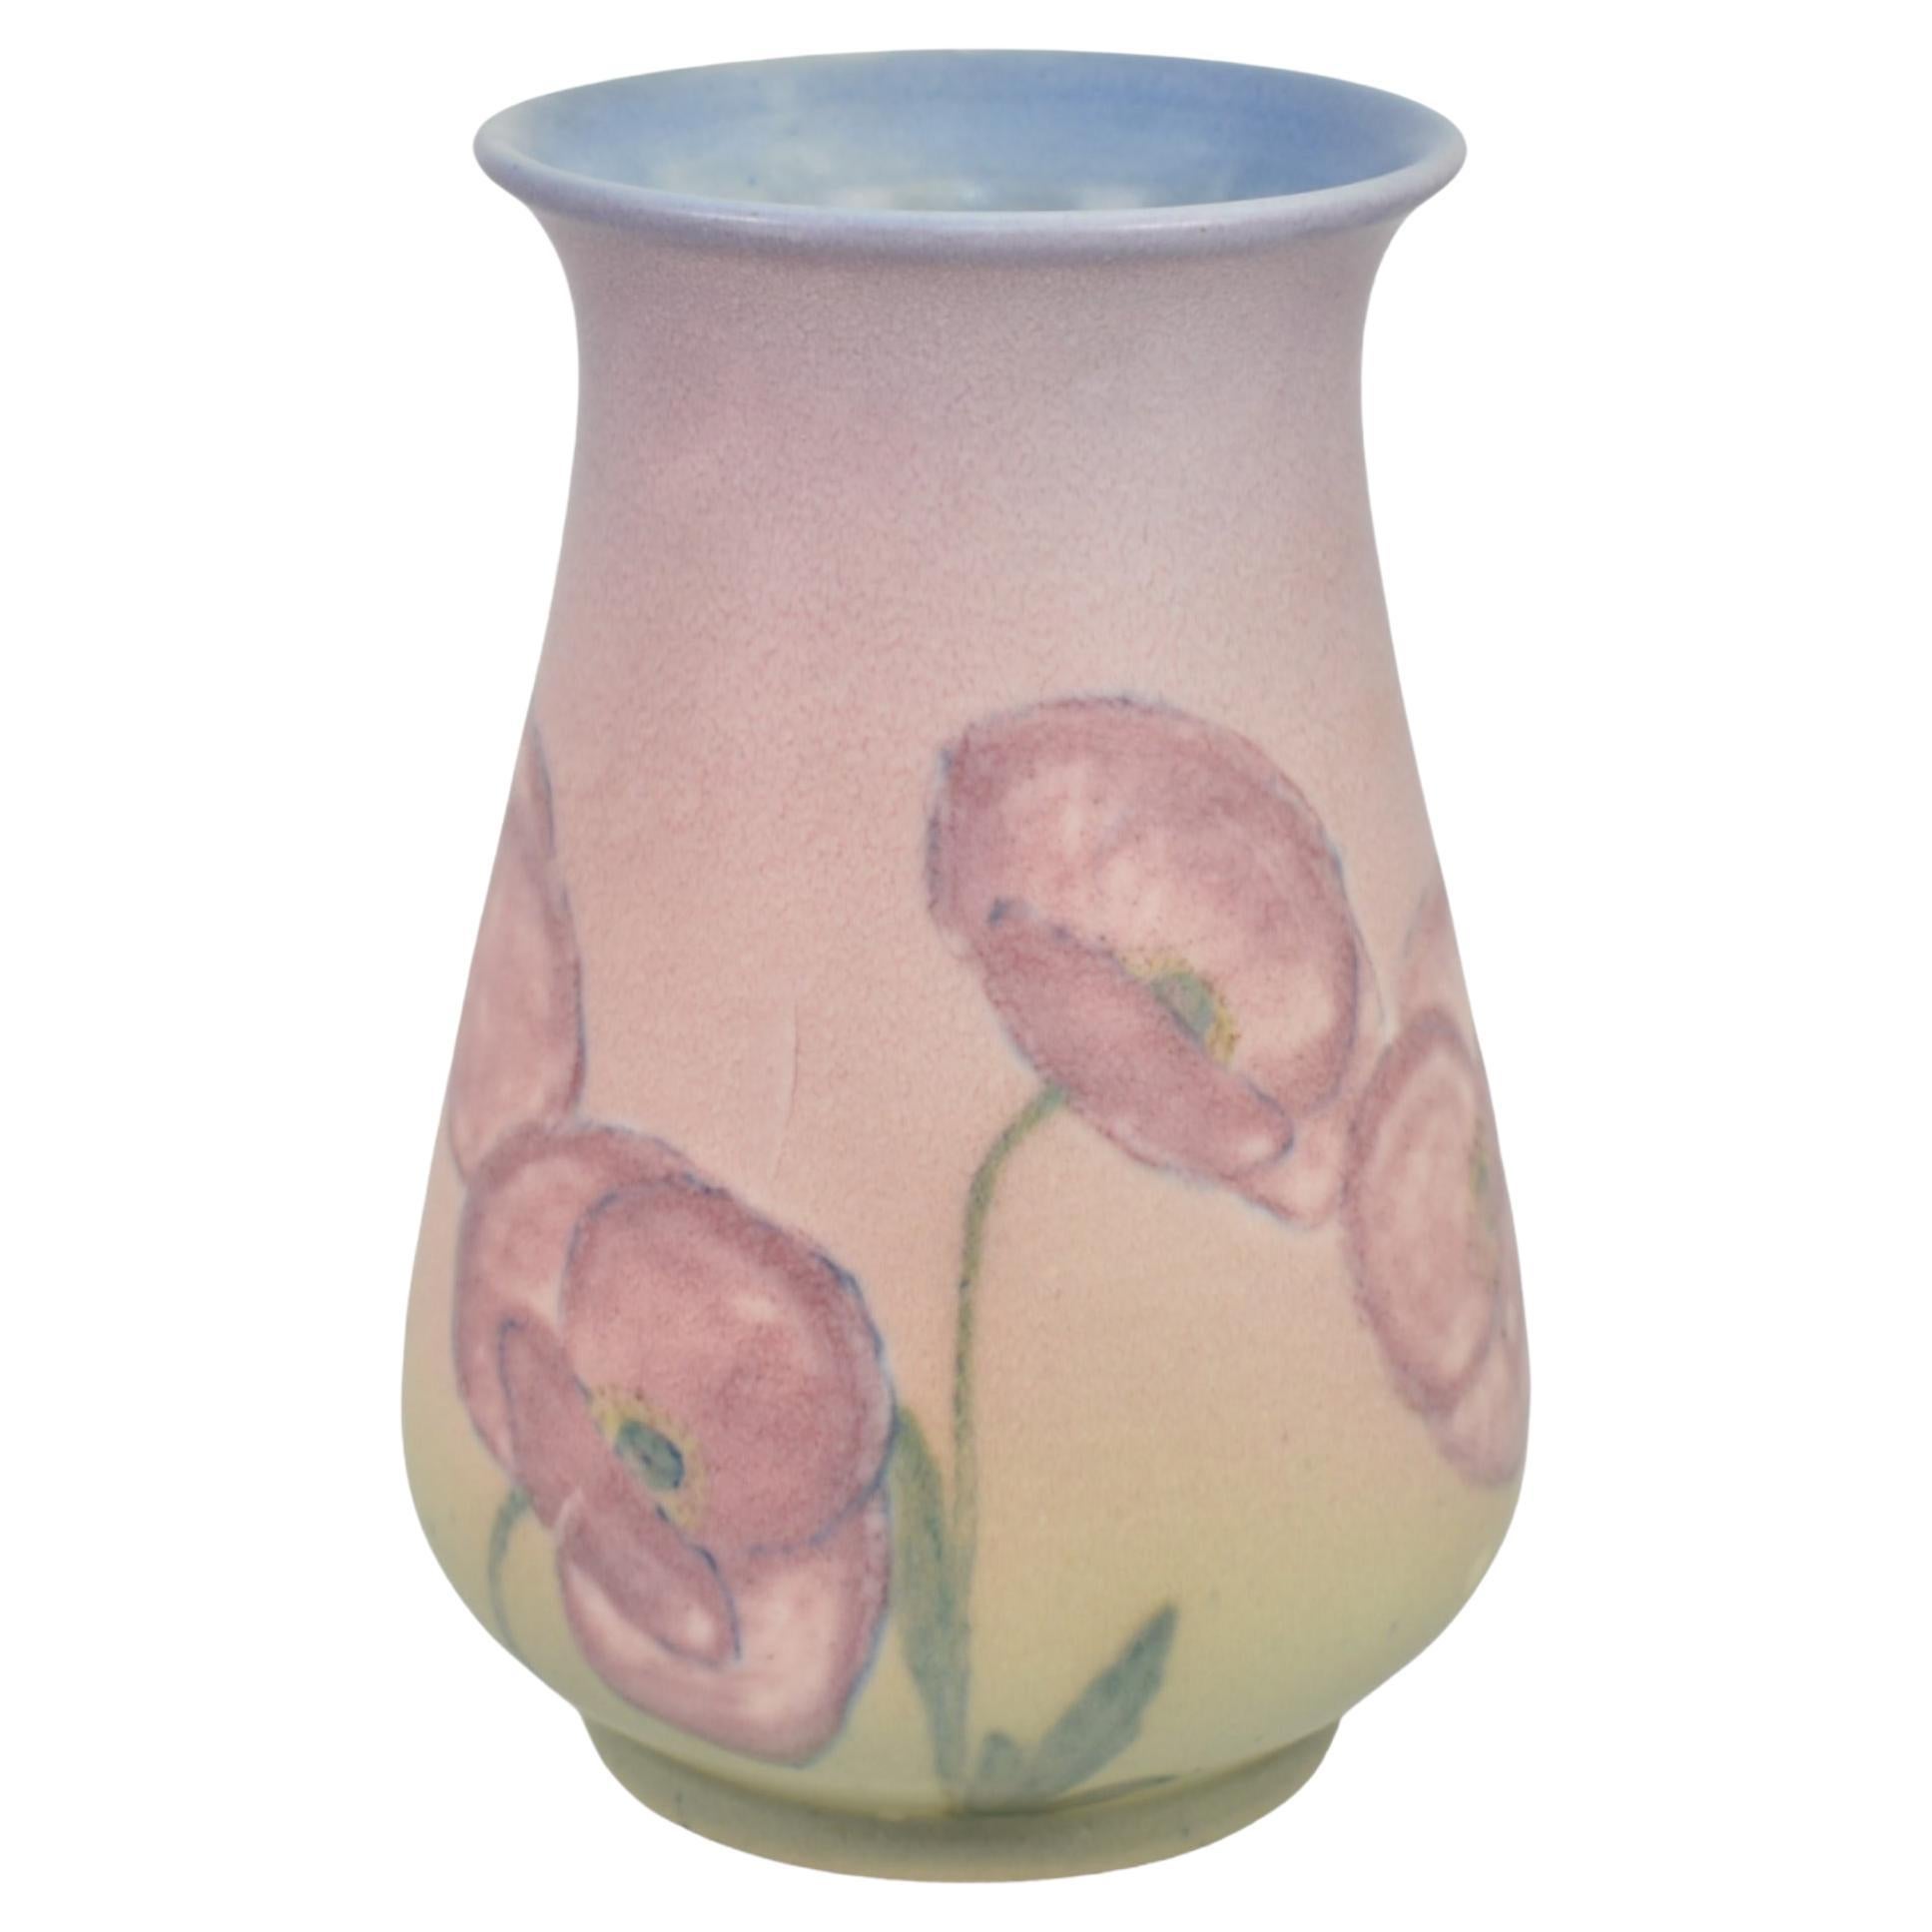 Rookwood 1943 Vintage Pottery Vellum Red Poppy Ceramic Vase 6350 Shirayamadani  For Sale